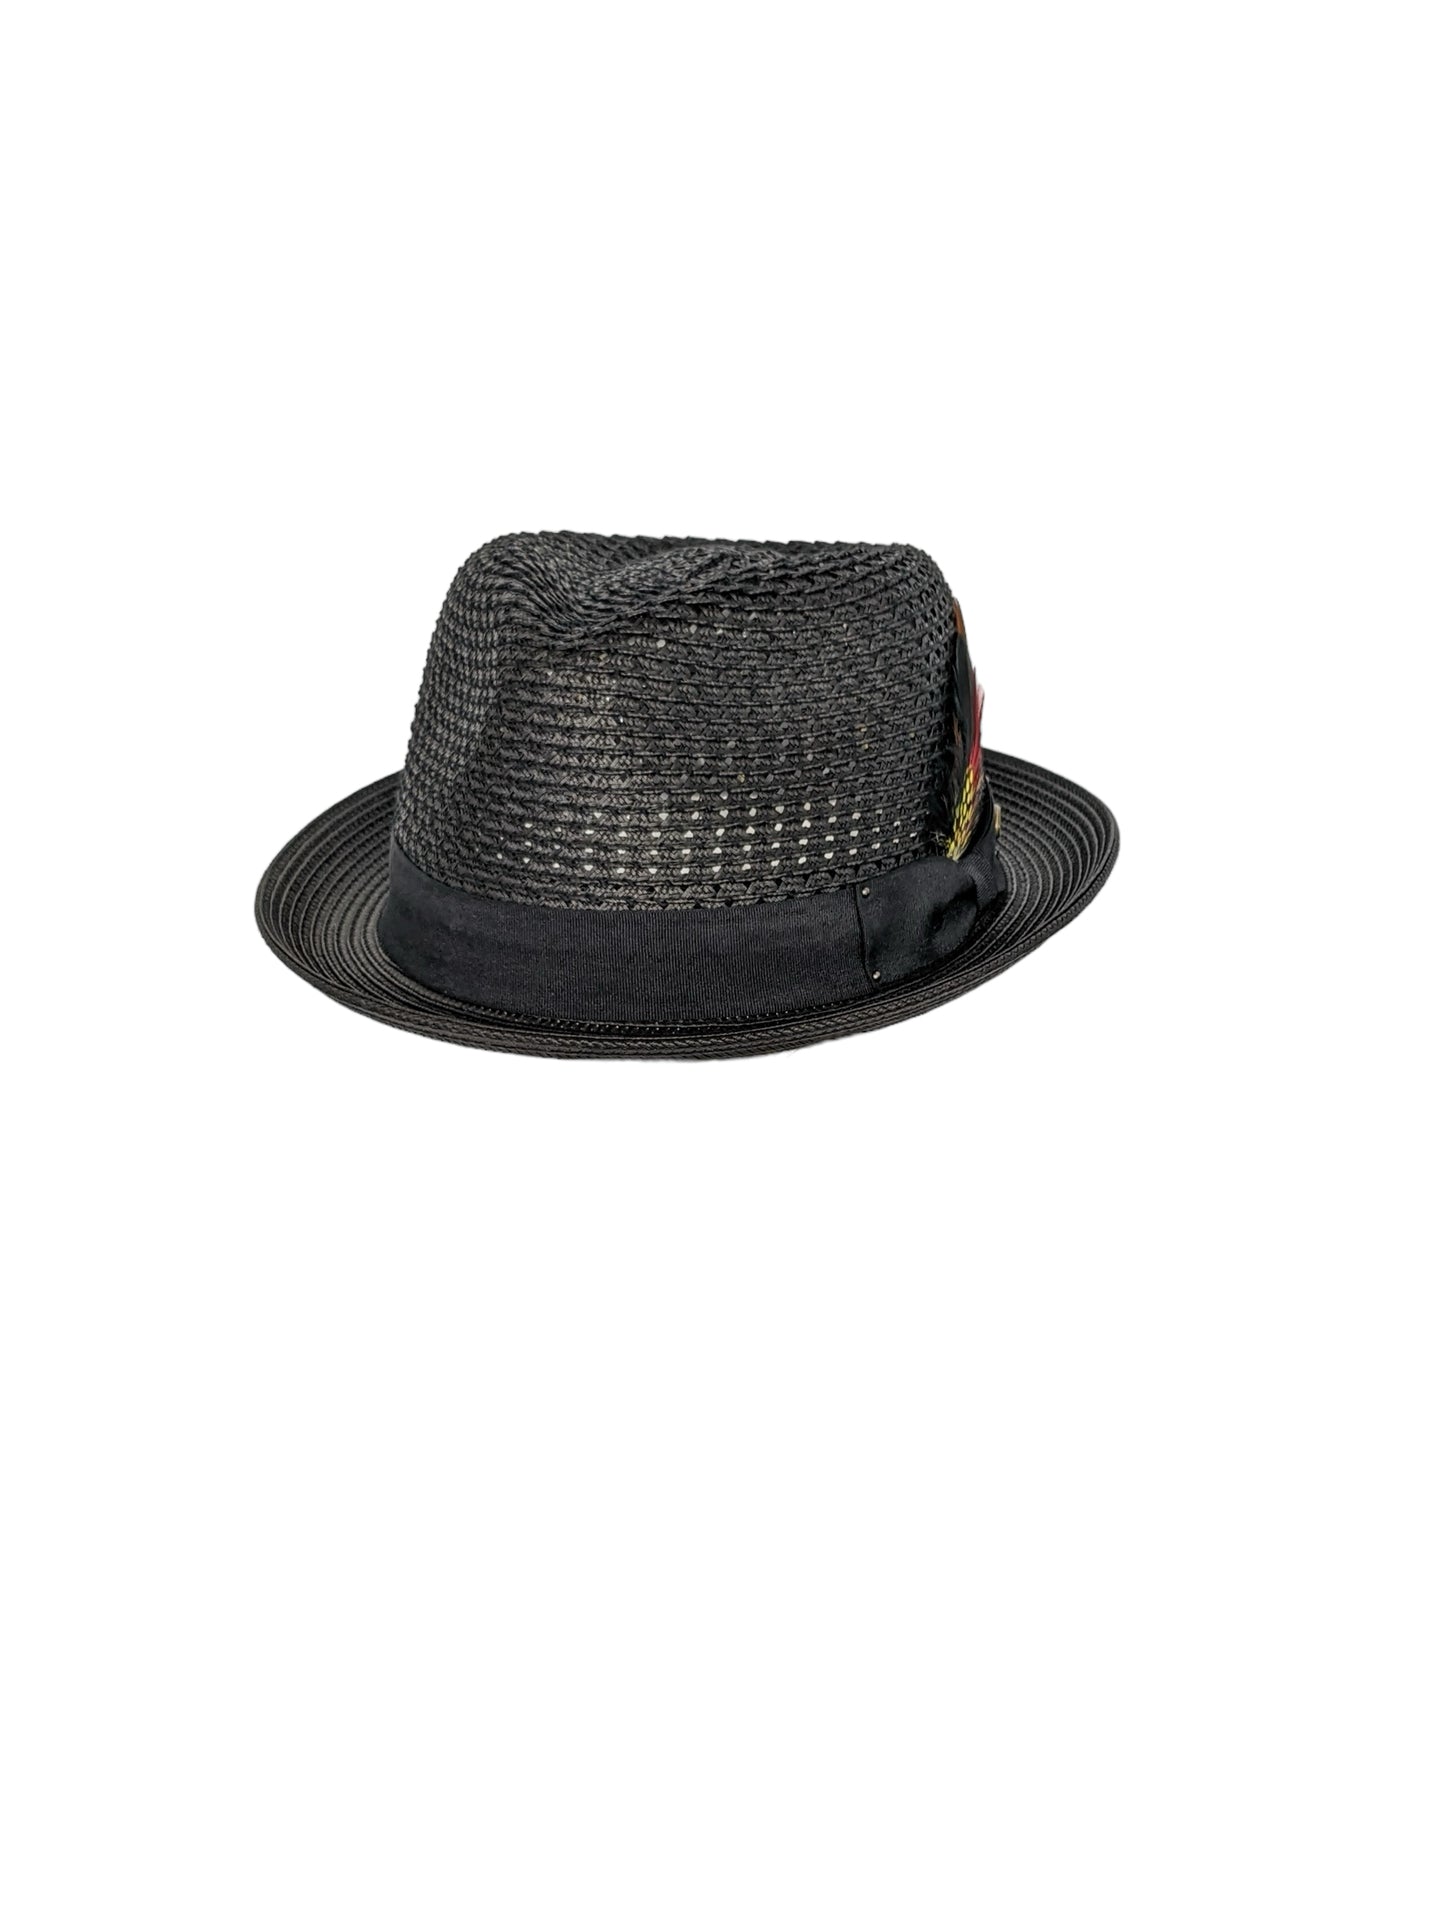 The Carter - Black - Men’s Poly Braid Hat